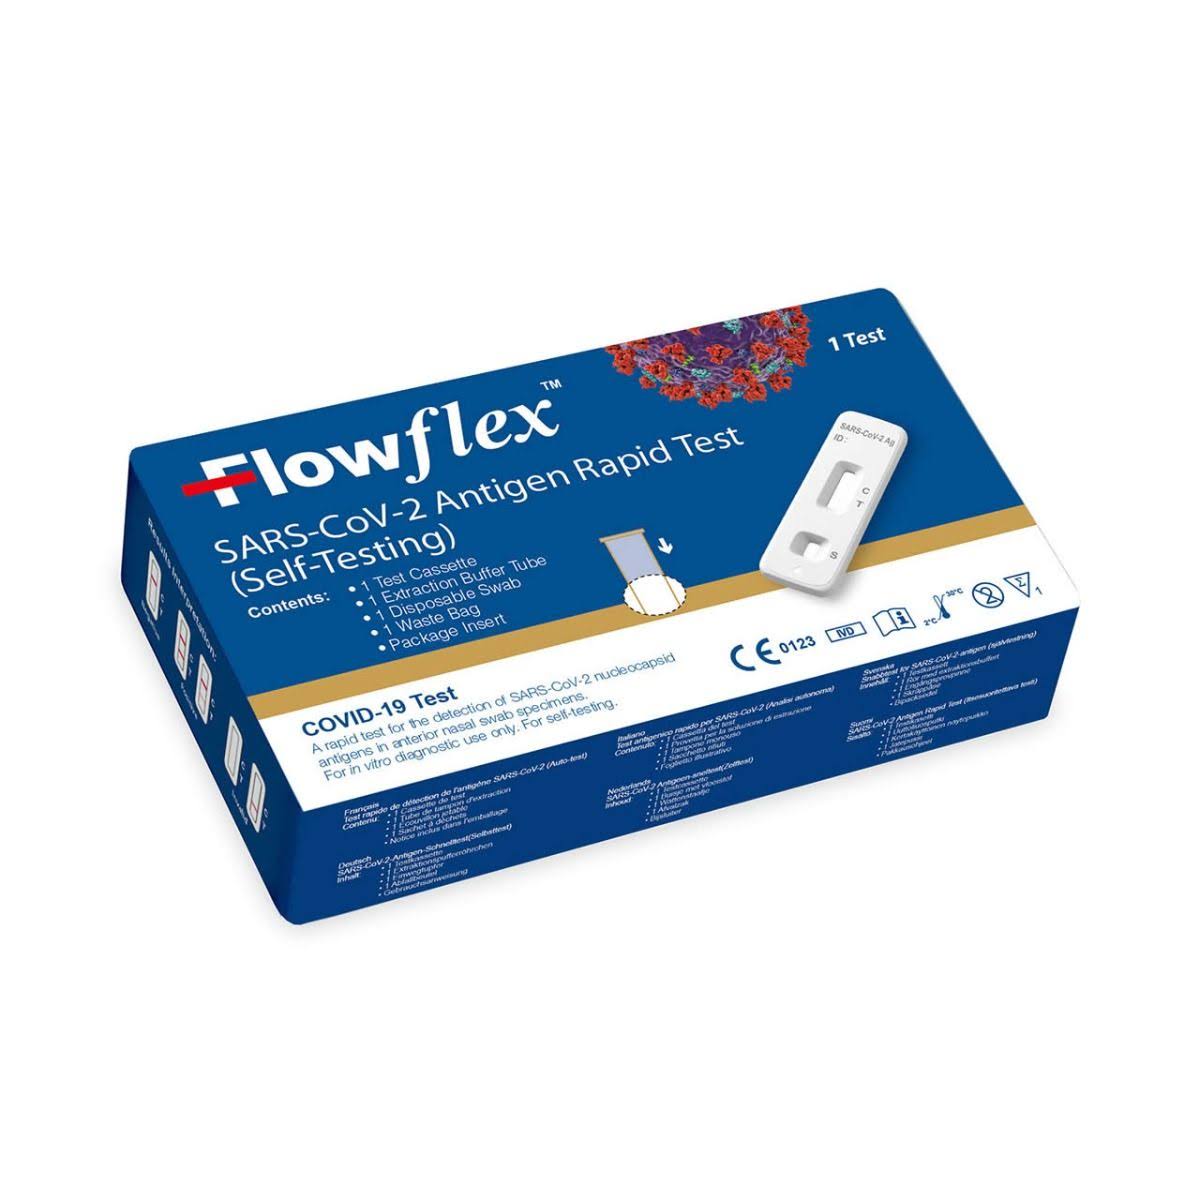 Flowflex Rapid Lateral Flow Covid-19 Antigen Test